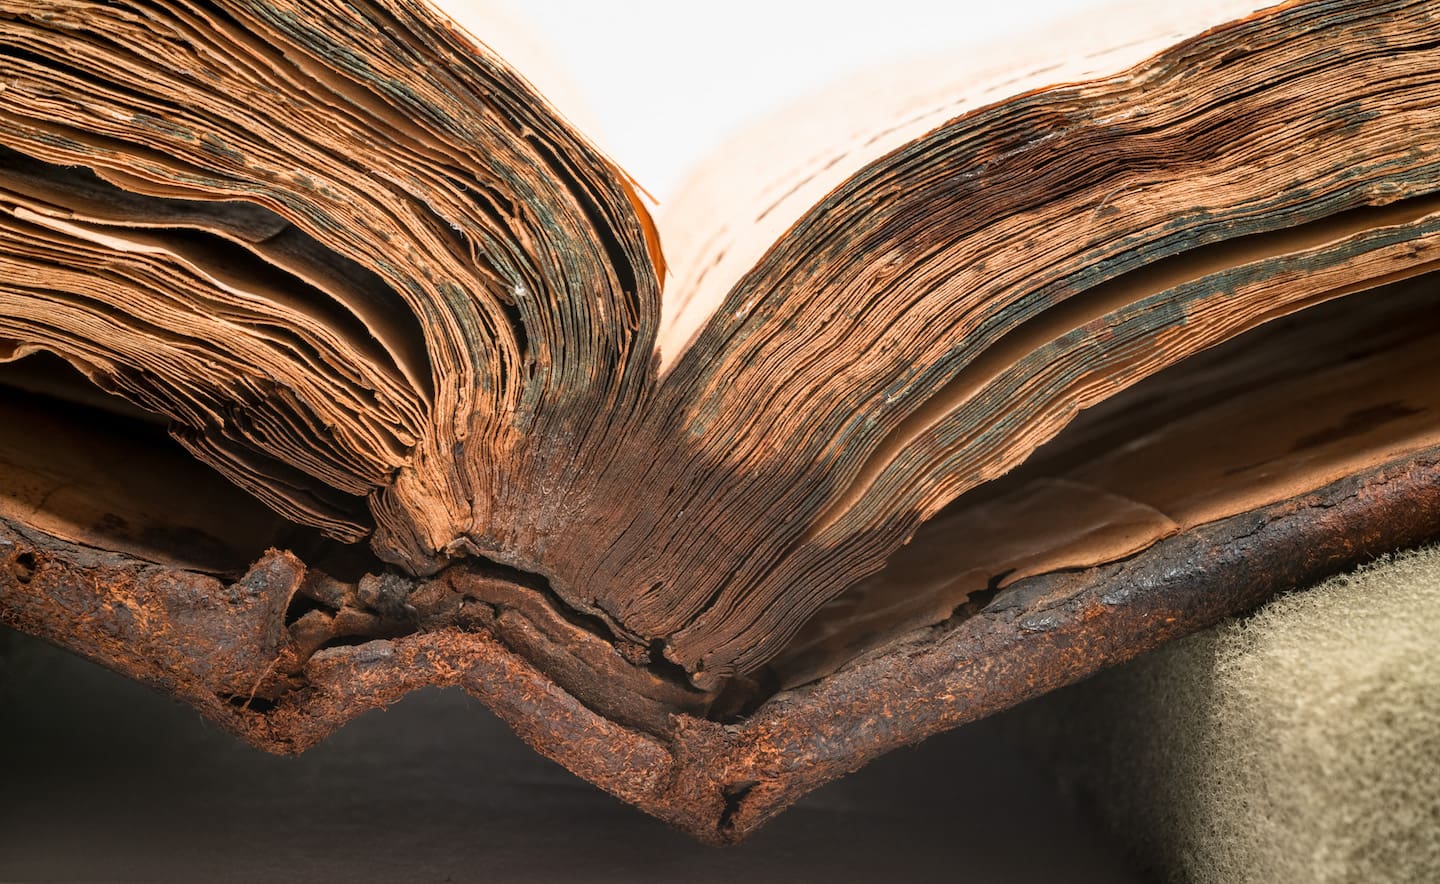 The Denig manuscript is too fragile to display. (Winterthur)